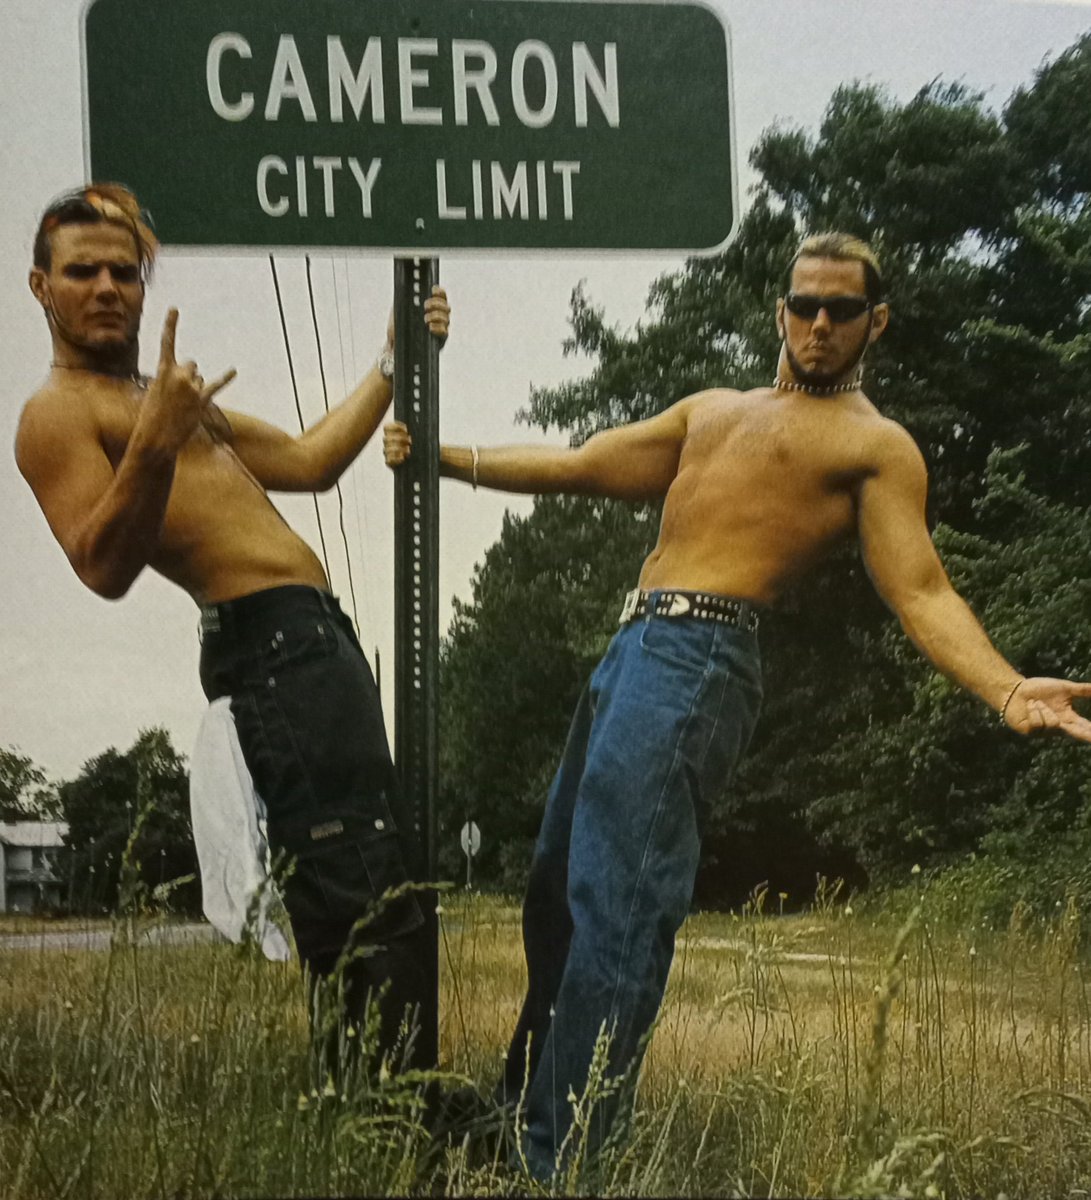 RT @WrestlingIsKing: The pride of Cameron,North Carolina:Jeff and Matt Hardy circa-1999 https://t.co/7jv9k6r8Vj